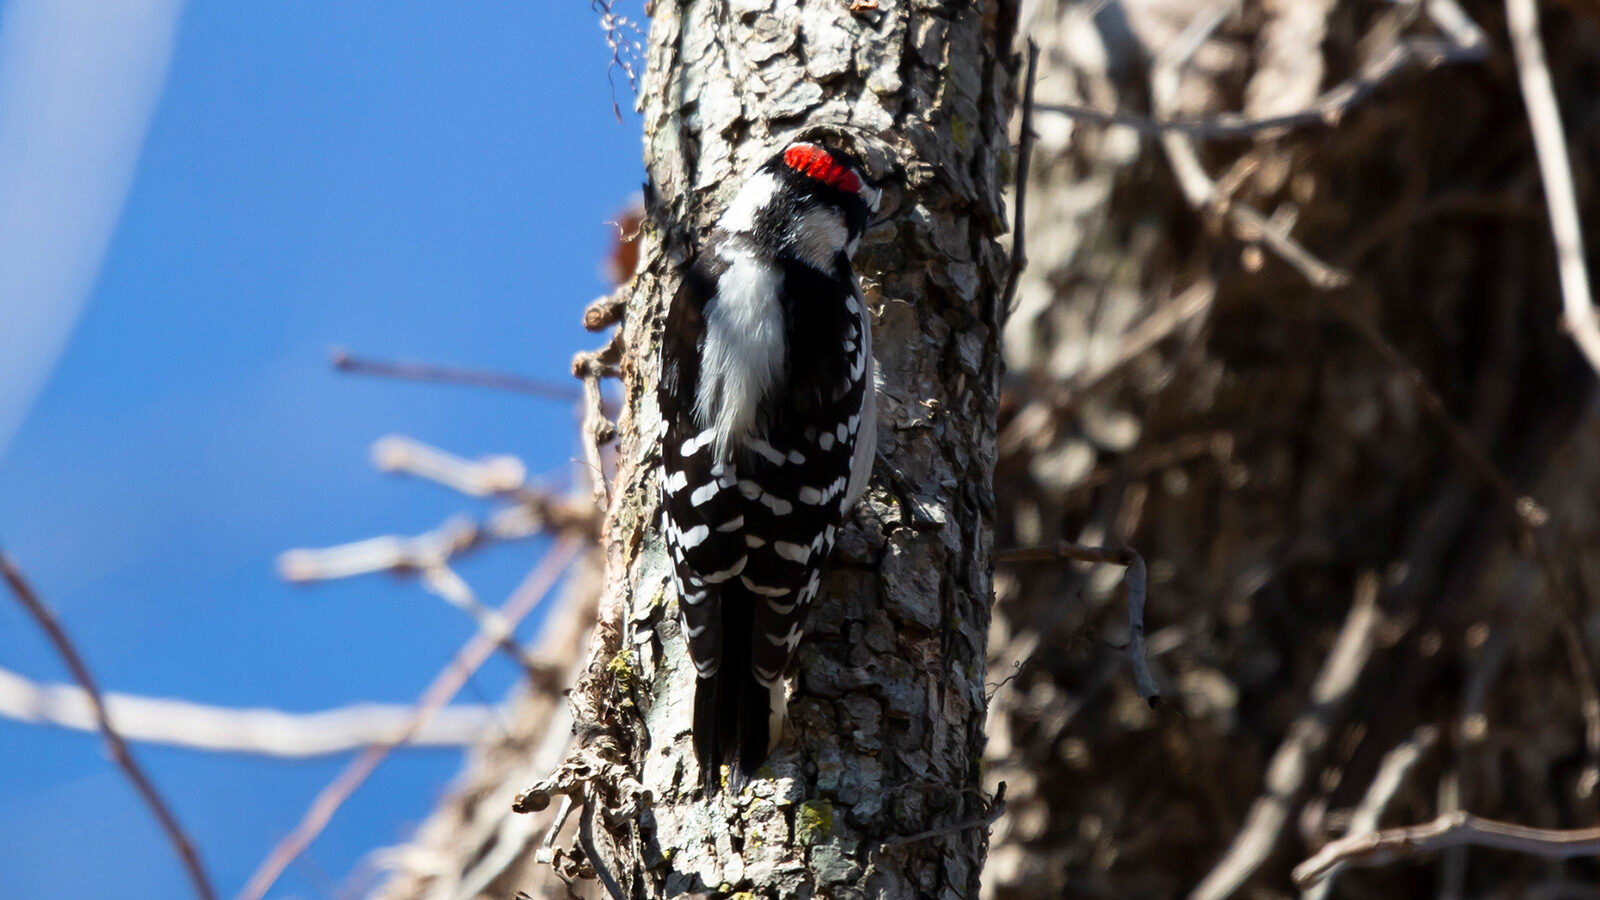 Hairy woodpecker drilling in a tree trunk